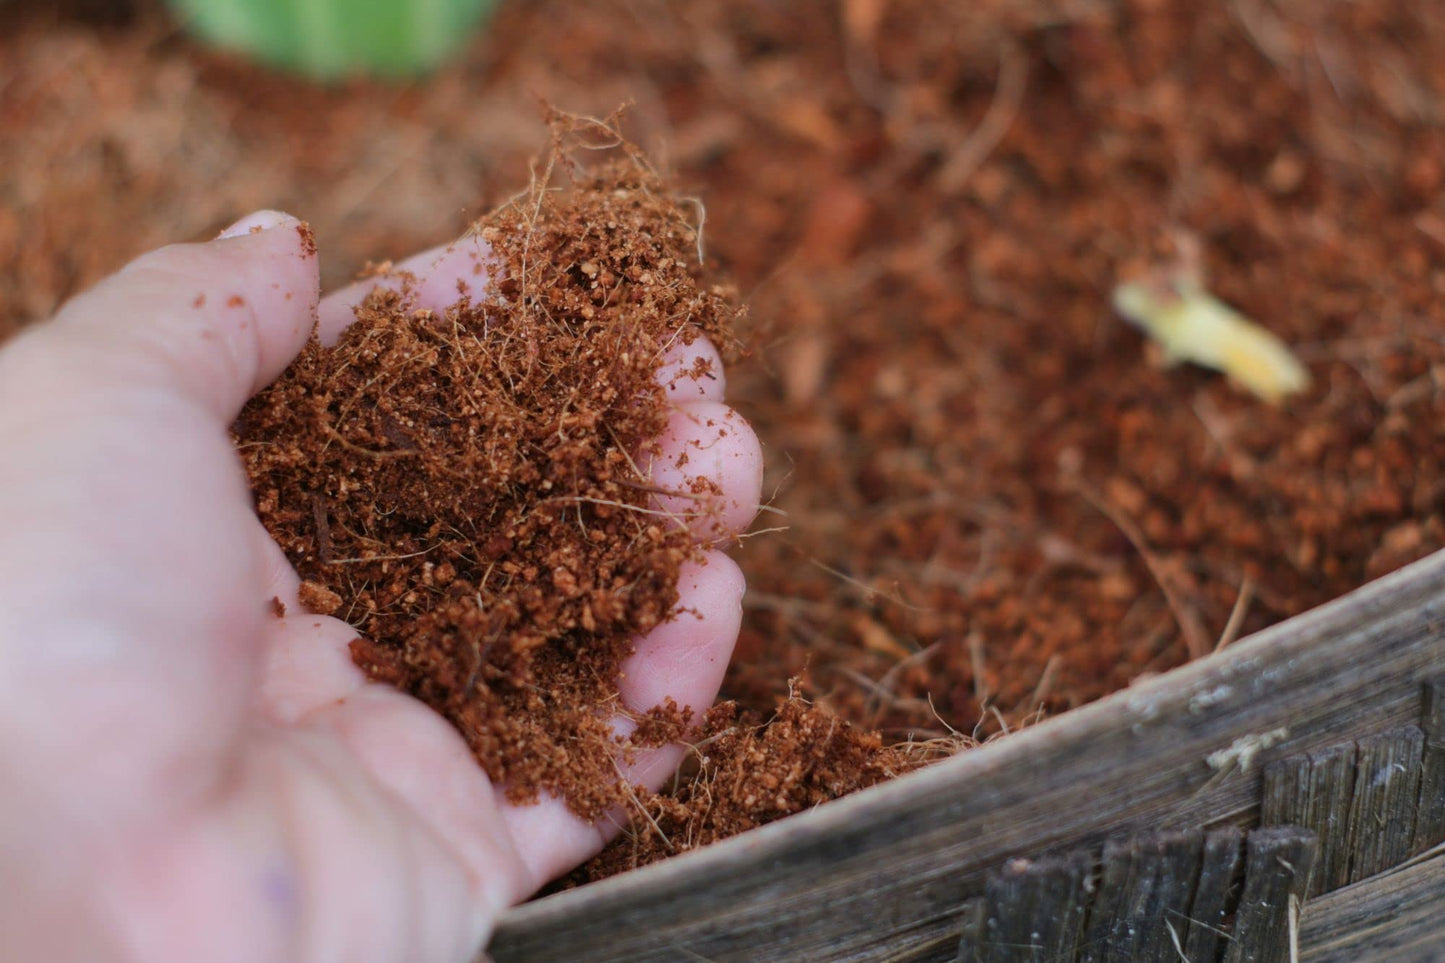 Organic Peat-Free Garden Compost - 8 x Litres in Convenient Paper Bag - AcquaGarden